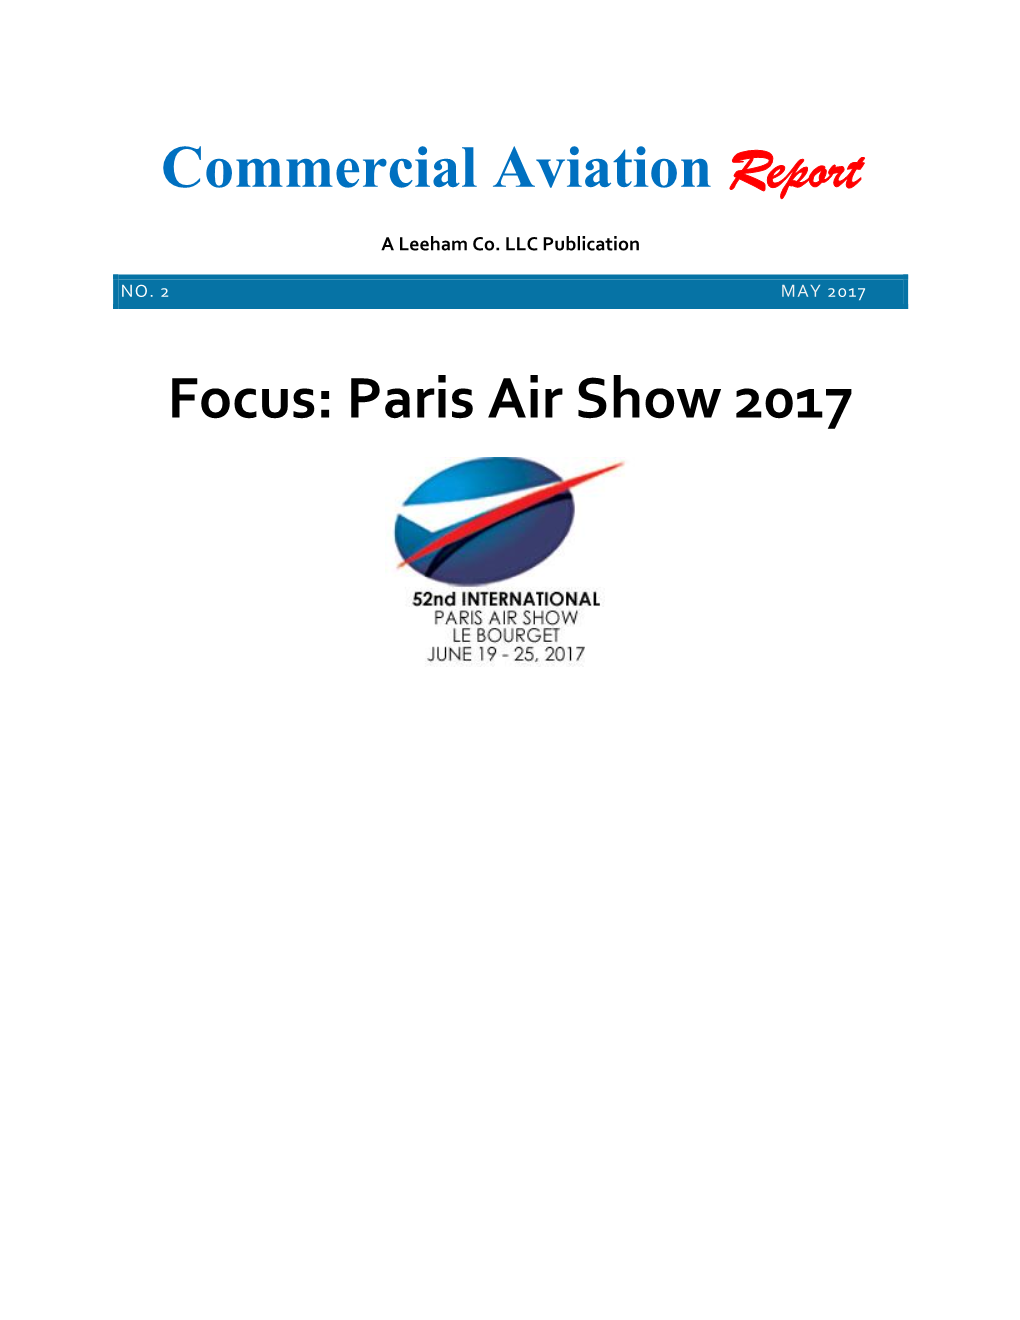 Commercial Aviation Report Focus: Paris Air Show 2017